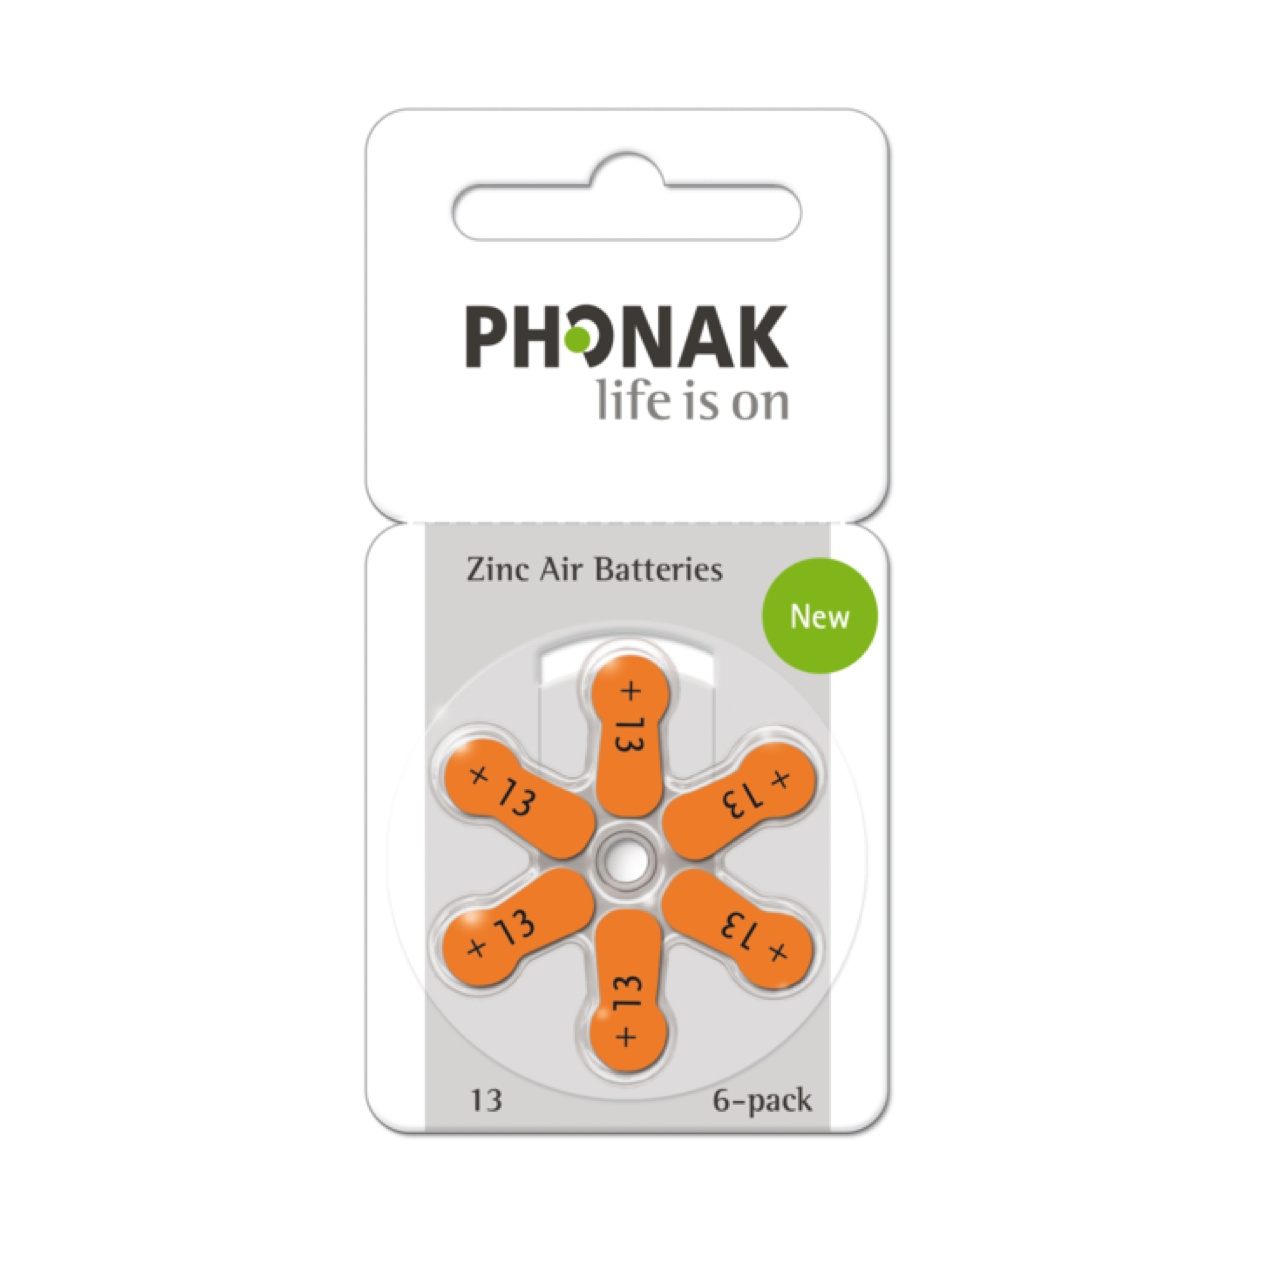 Die Phonak Hörgerätebatterien sind besonders leistungsstarke Batterien der Firma Phonak.